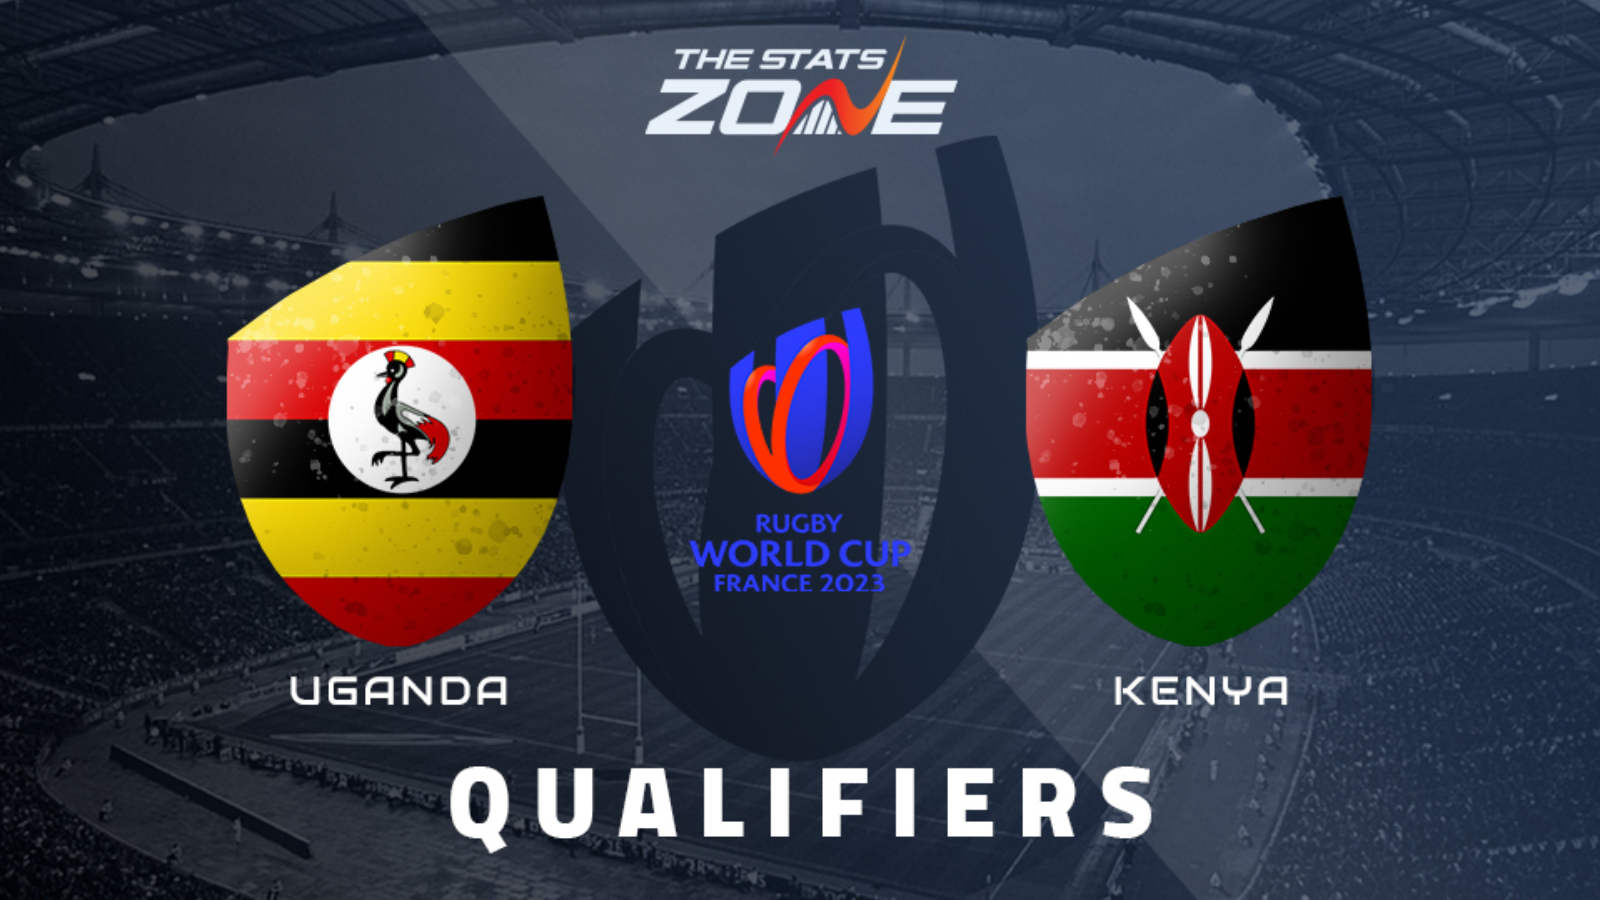 RugbyWorldCup2023 Qualifiers Uganda Vs Kenya 